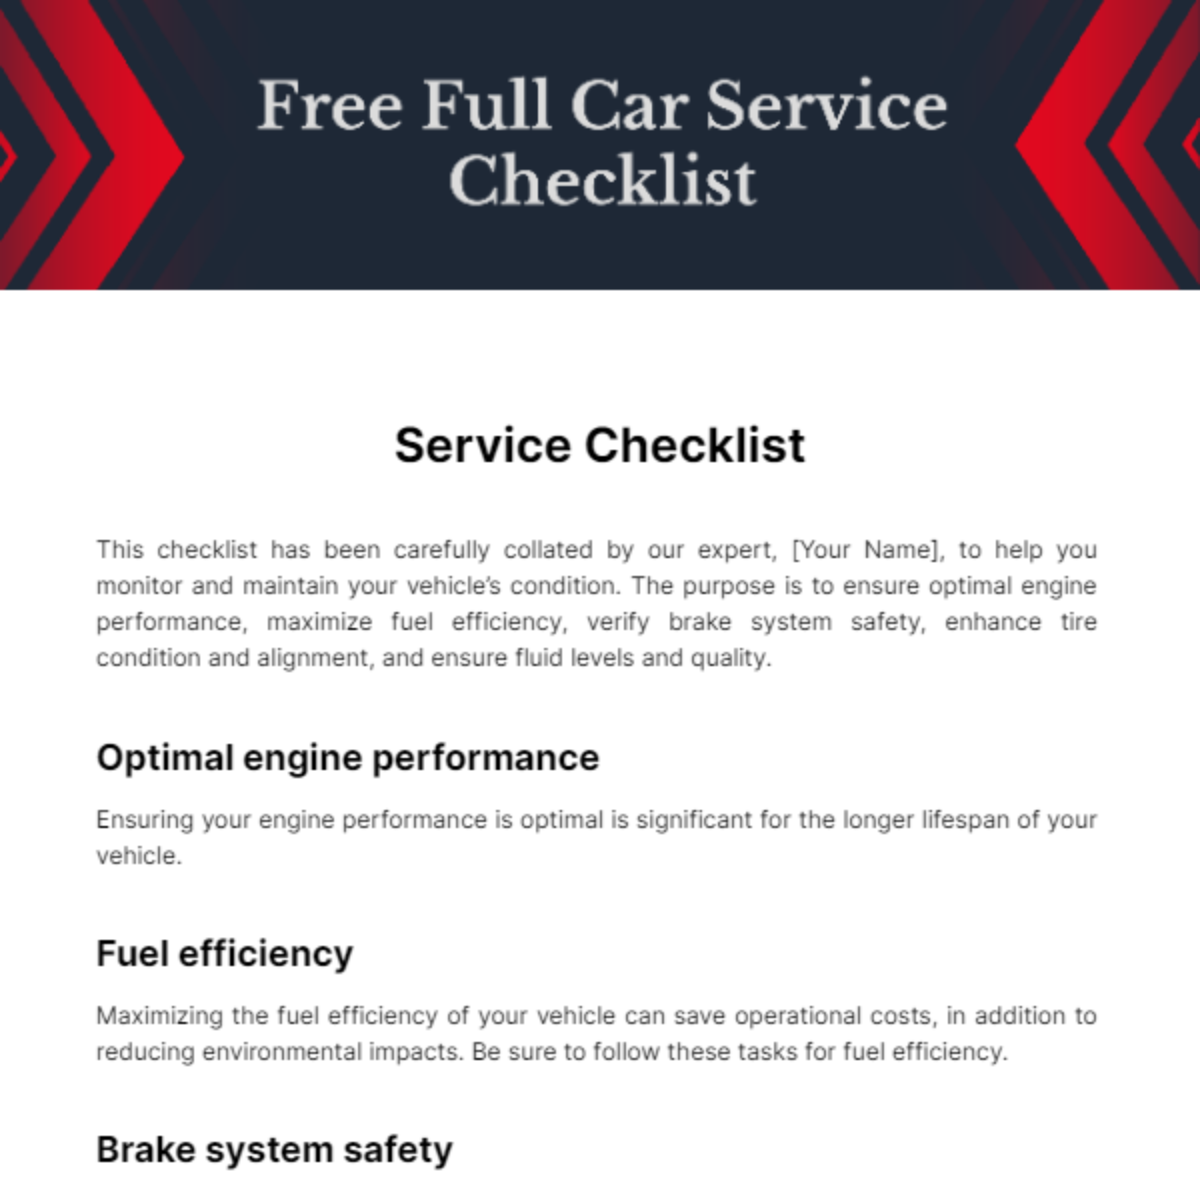 Free Full Car Service Checklist Template